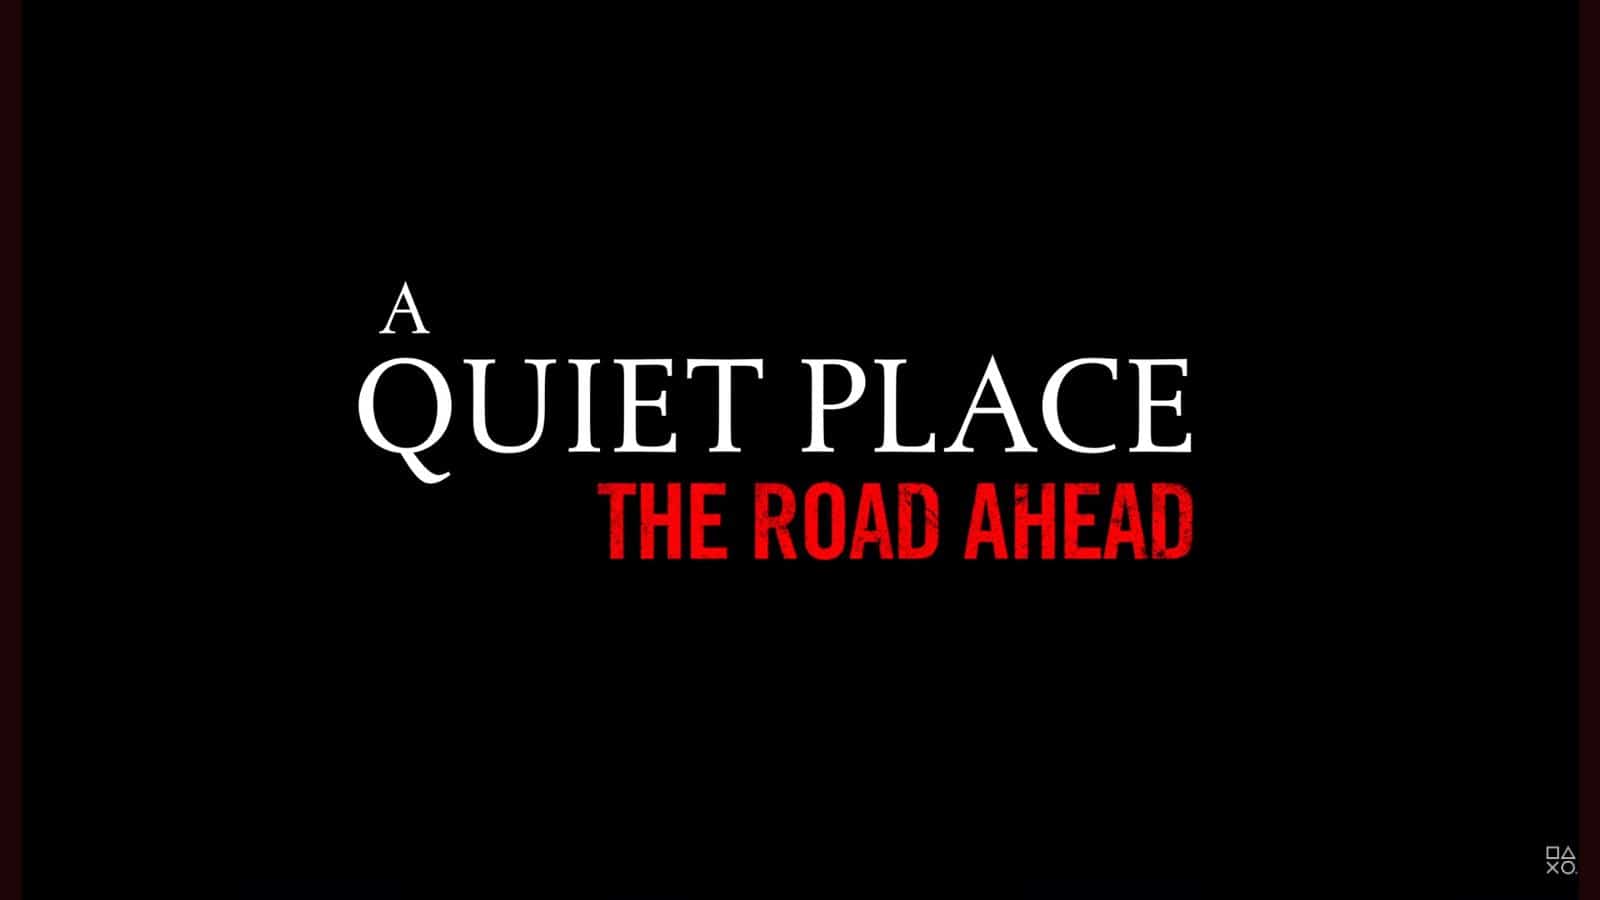 Play3 Video: A Quiet Place The Road Ahead: Videospiel zum Horrorfilm mit Trailer enthüllt